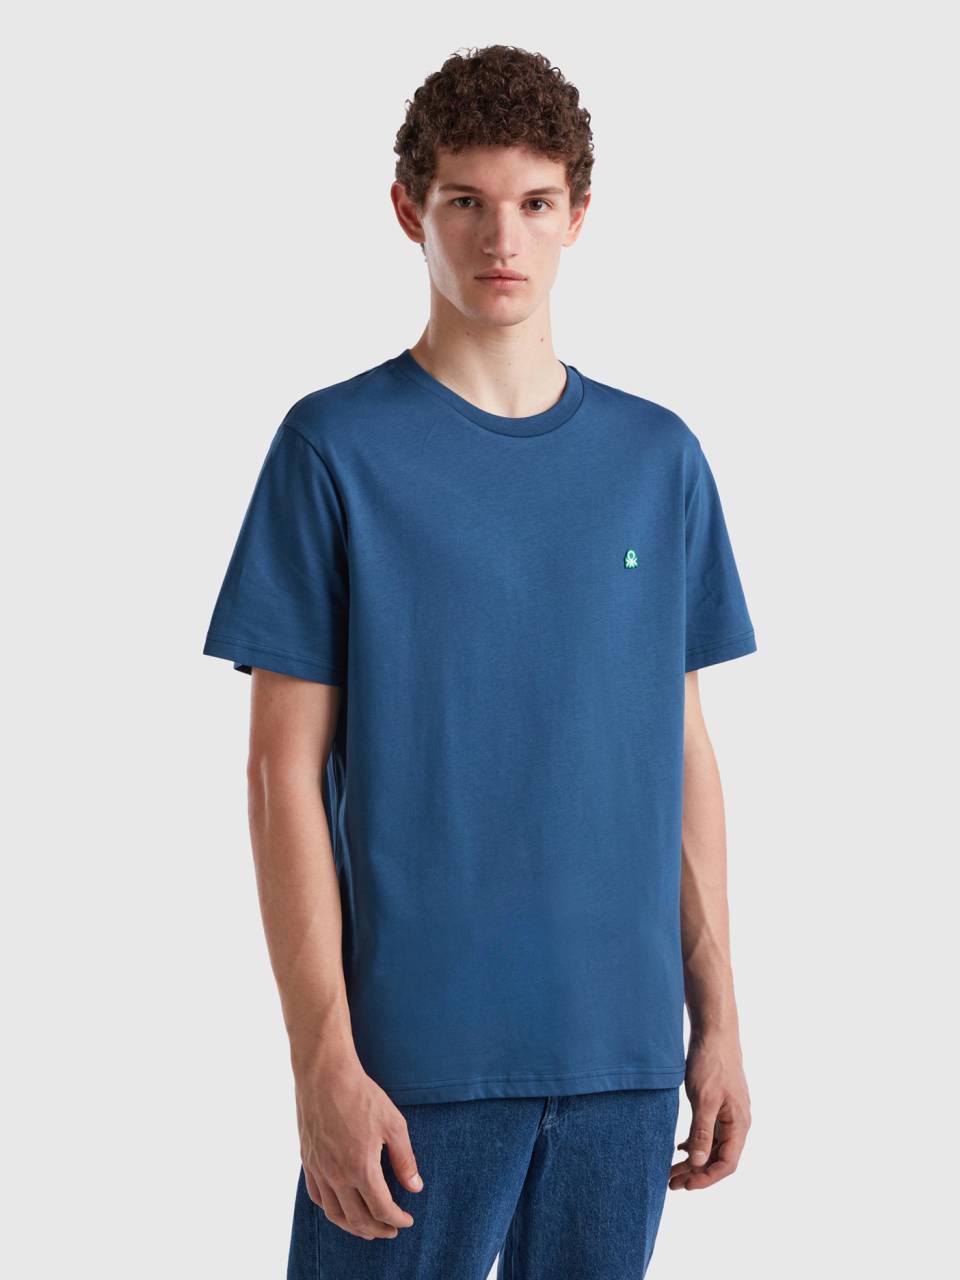 Force - t-shirt cotton basic Benetton Blue 100% Air | organic